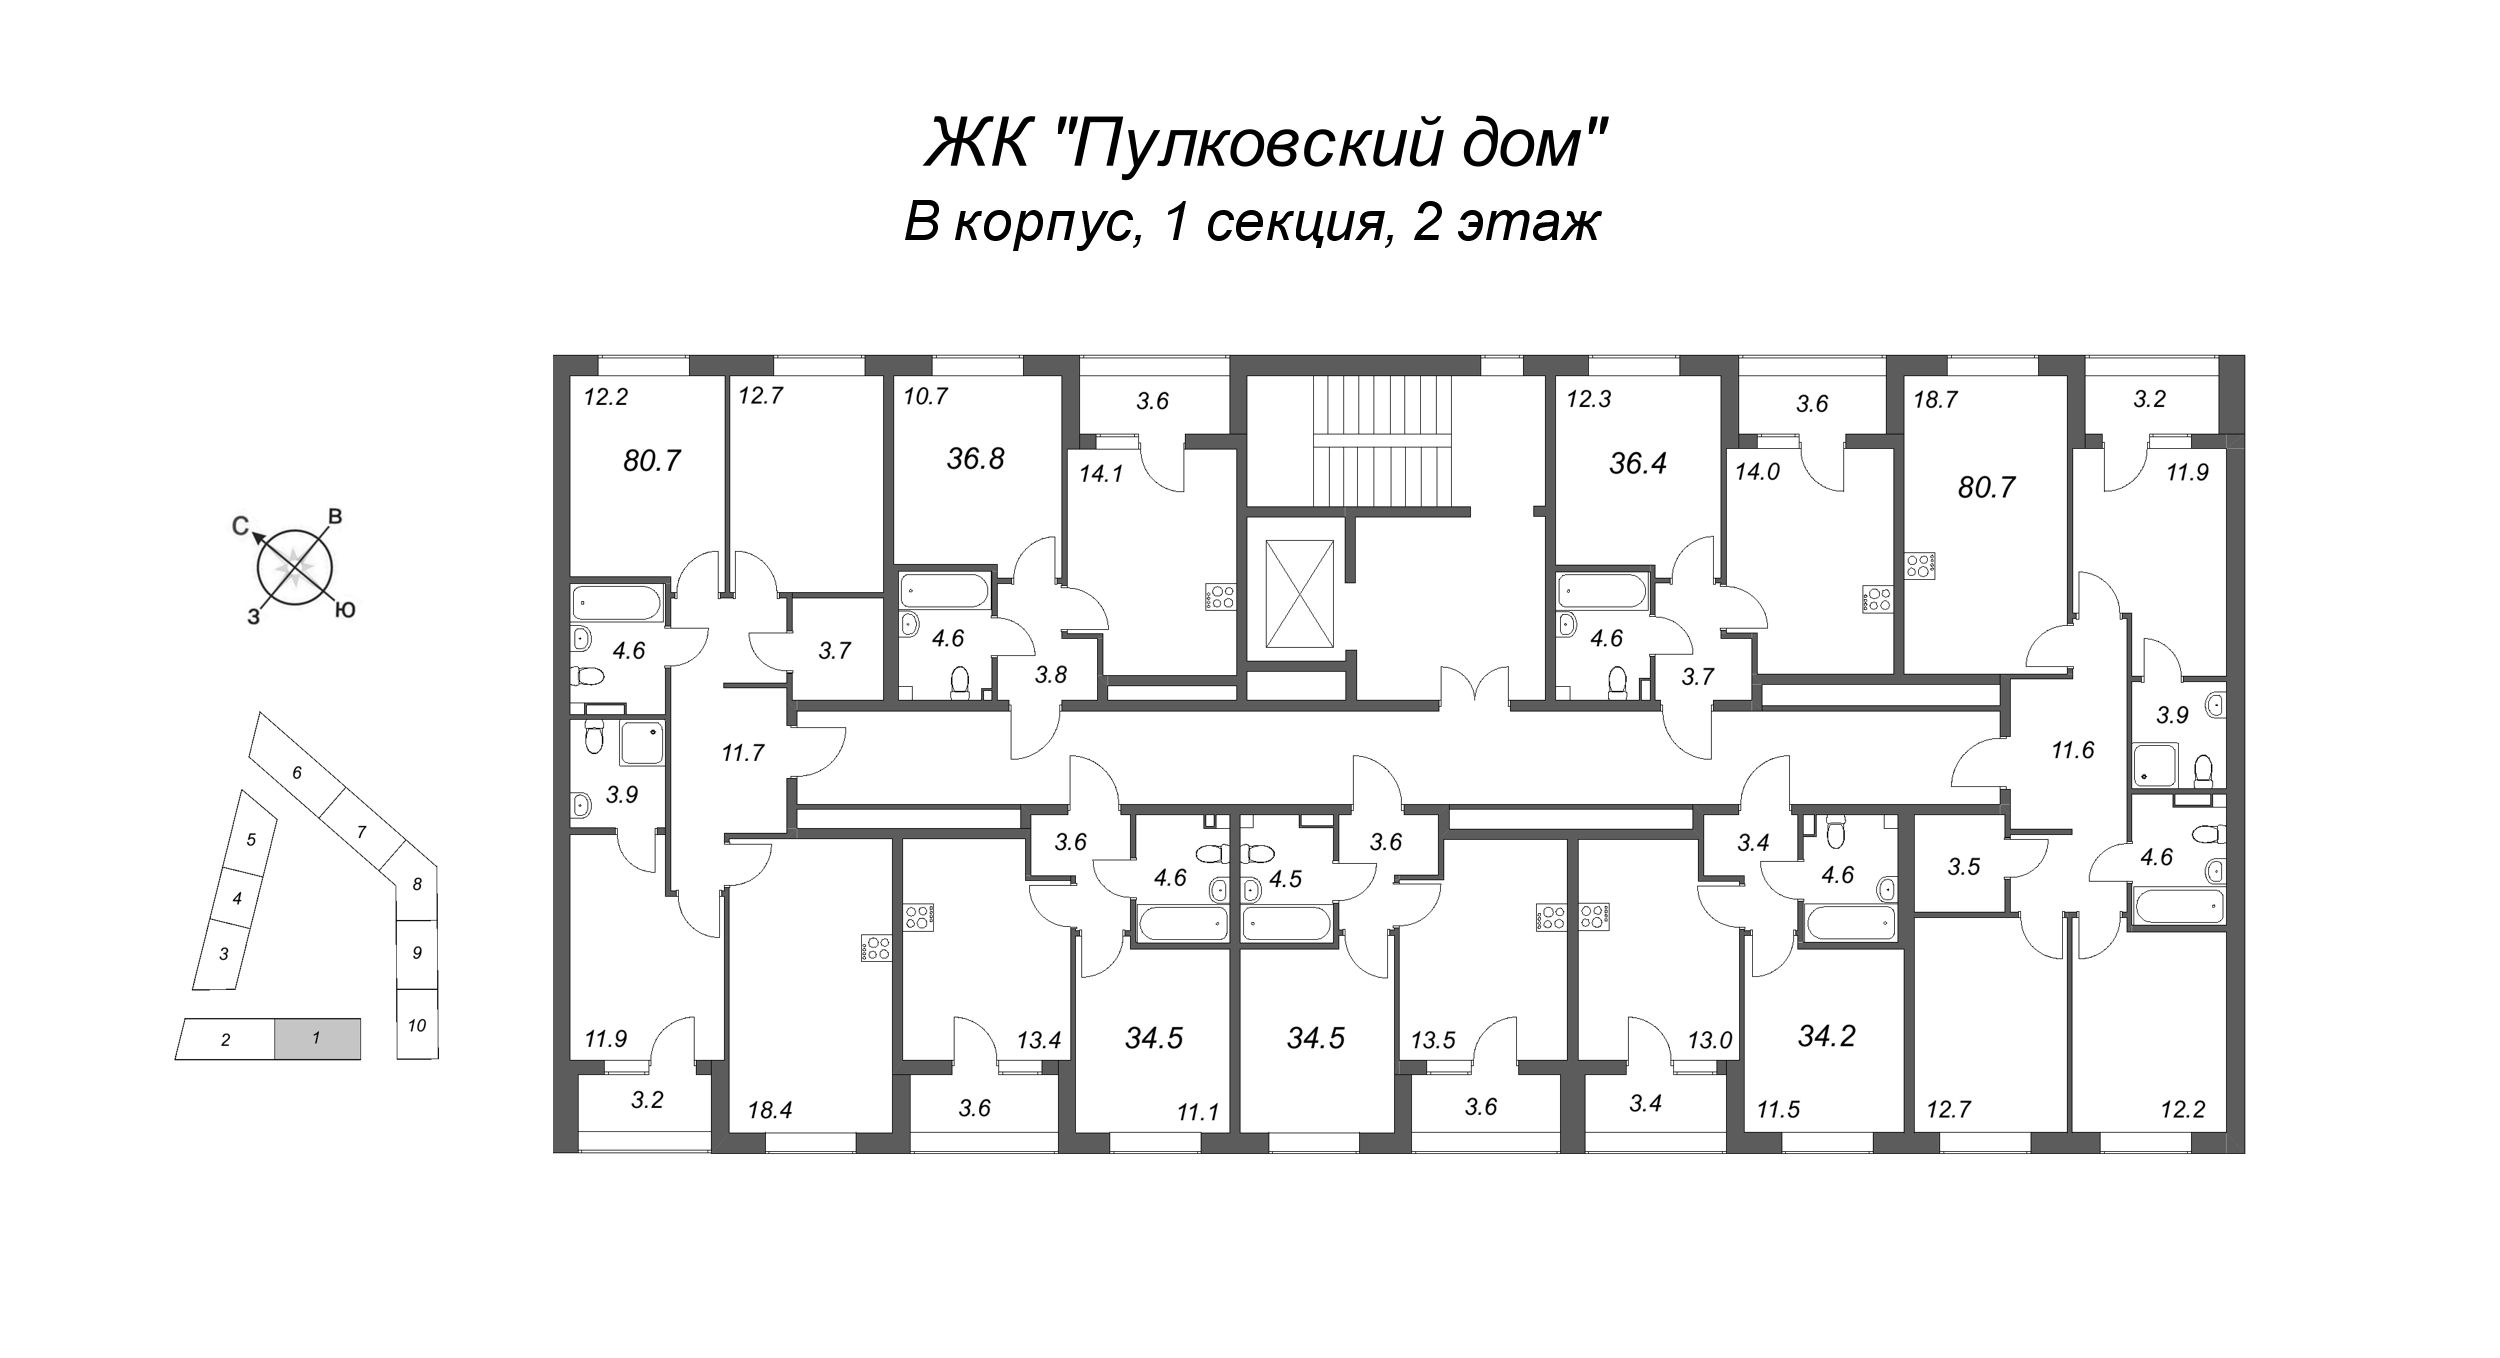 4-комнатная (Евро) квартира, 80.7 м² - планировка этажа